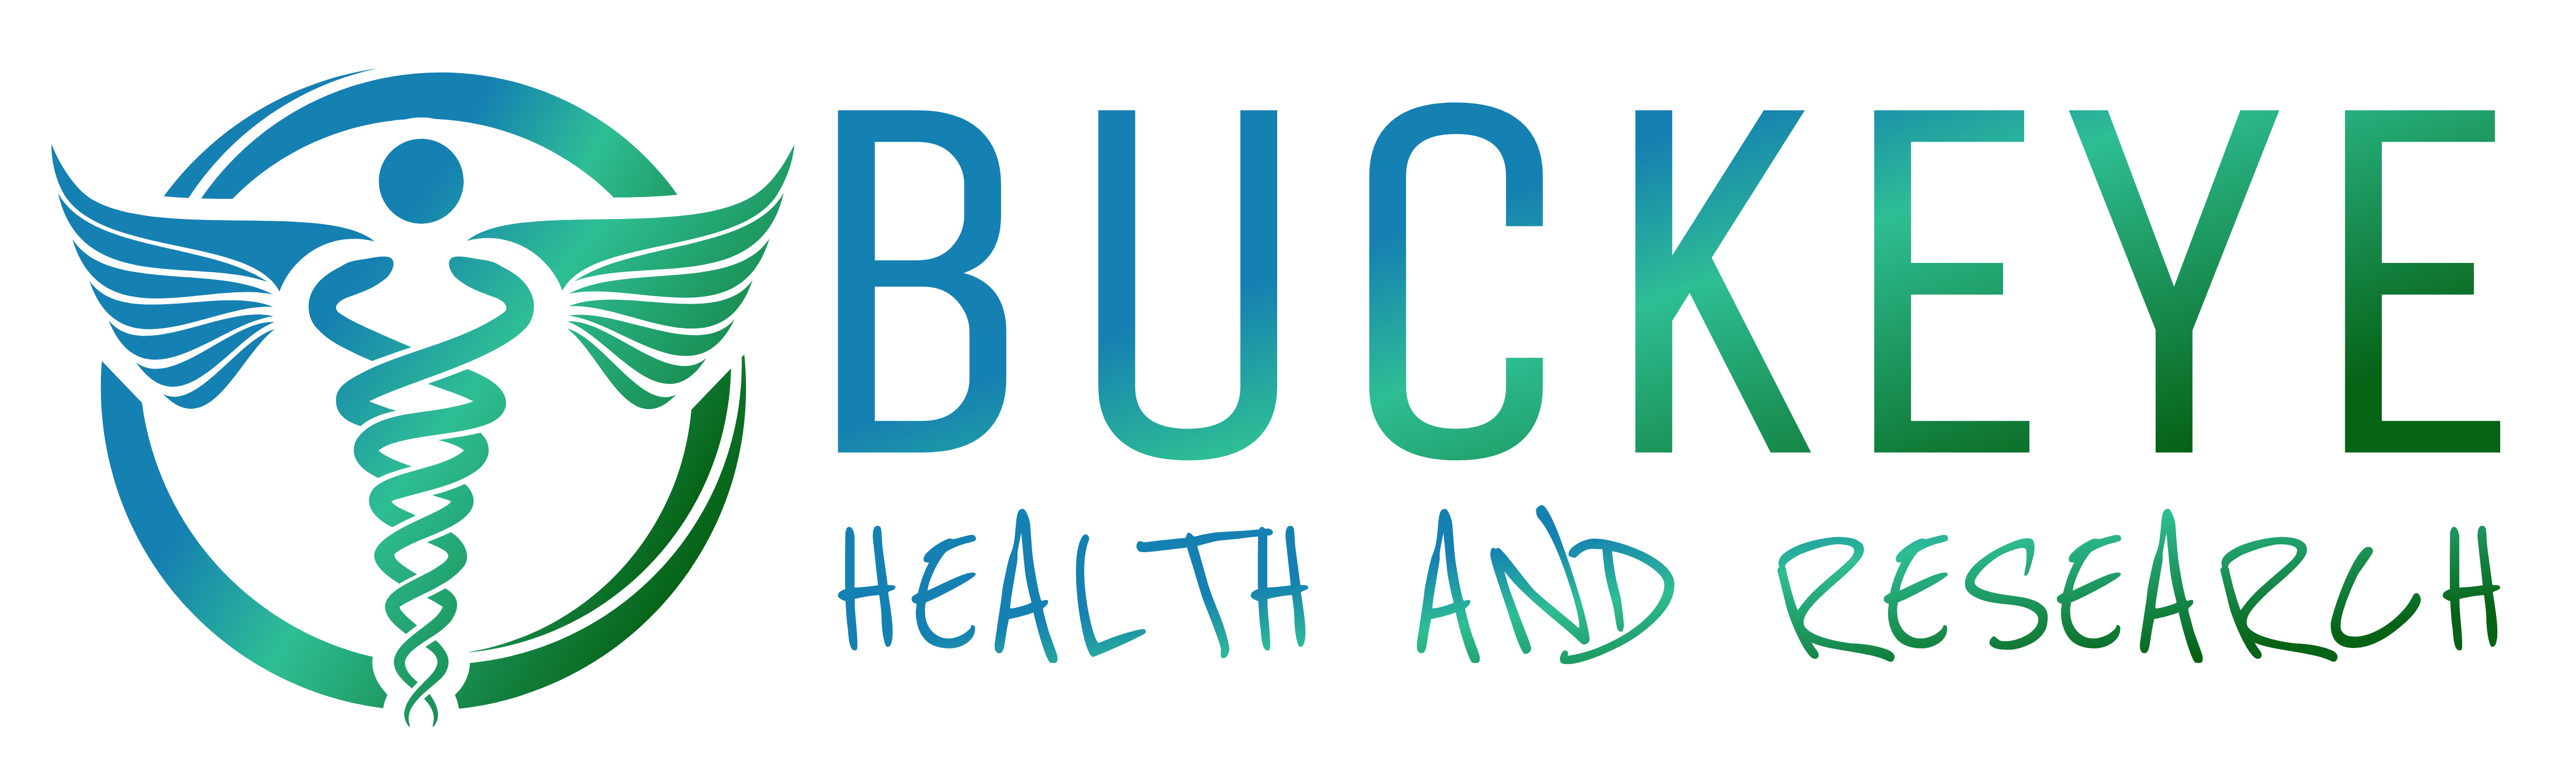 Buckeye Health and Research